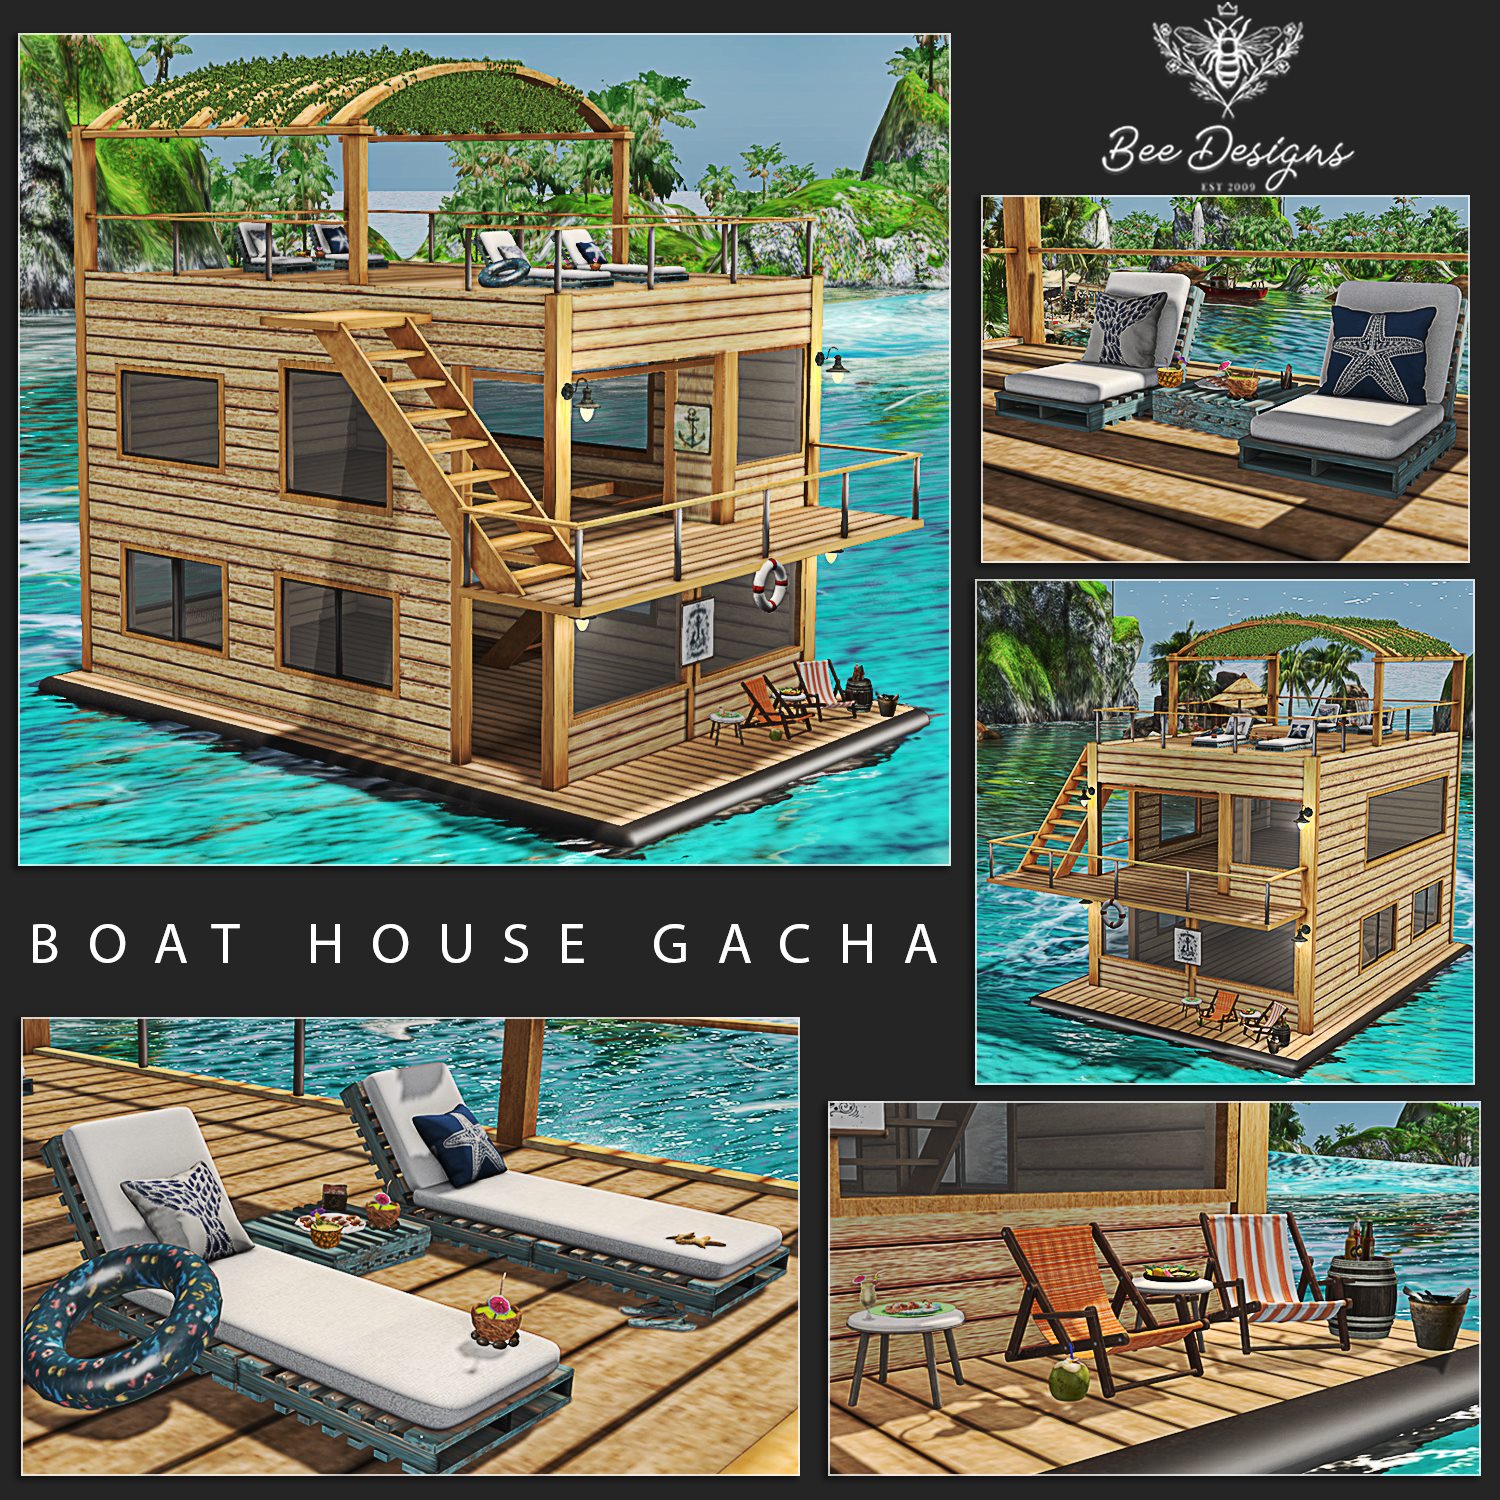 Bee Design – Boat House Gacha